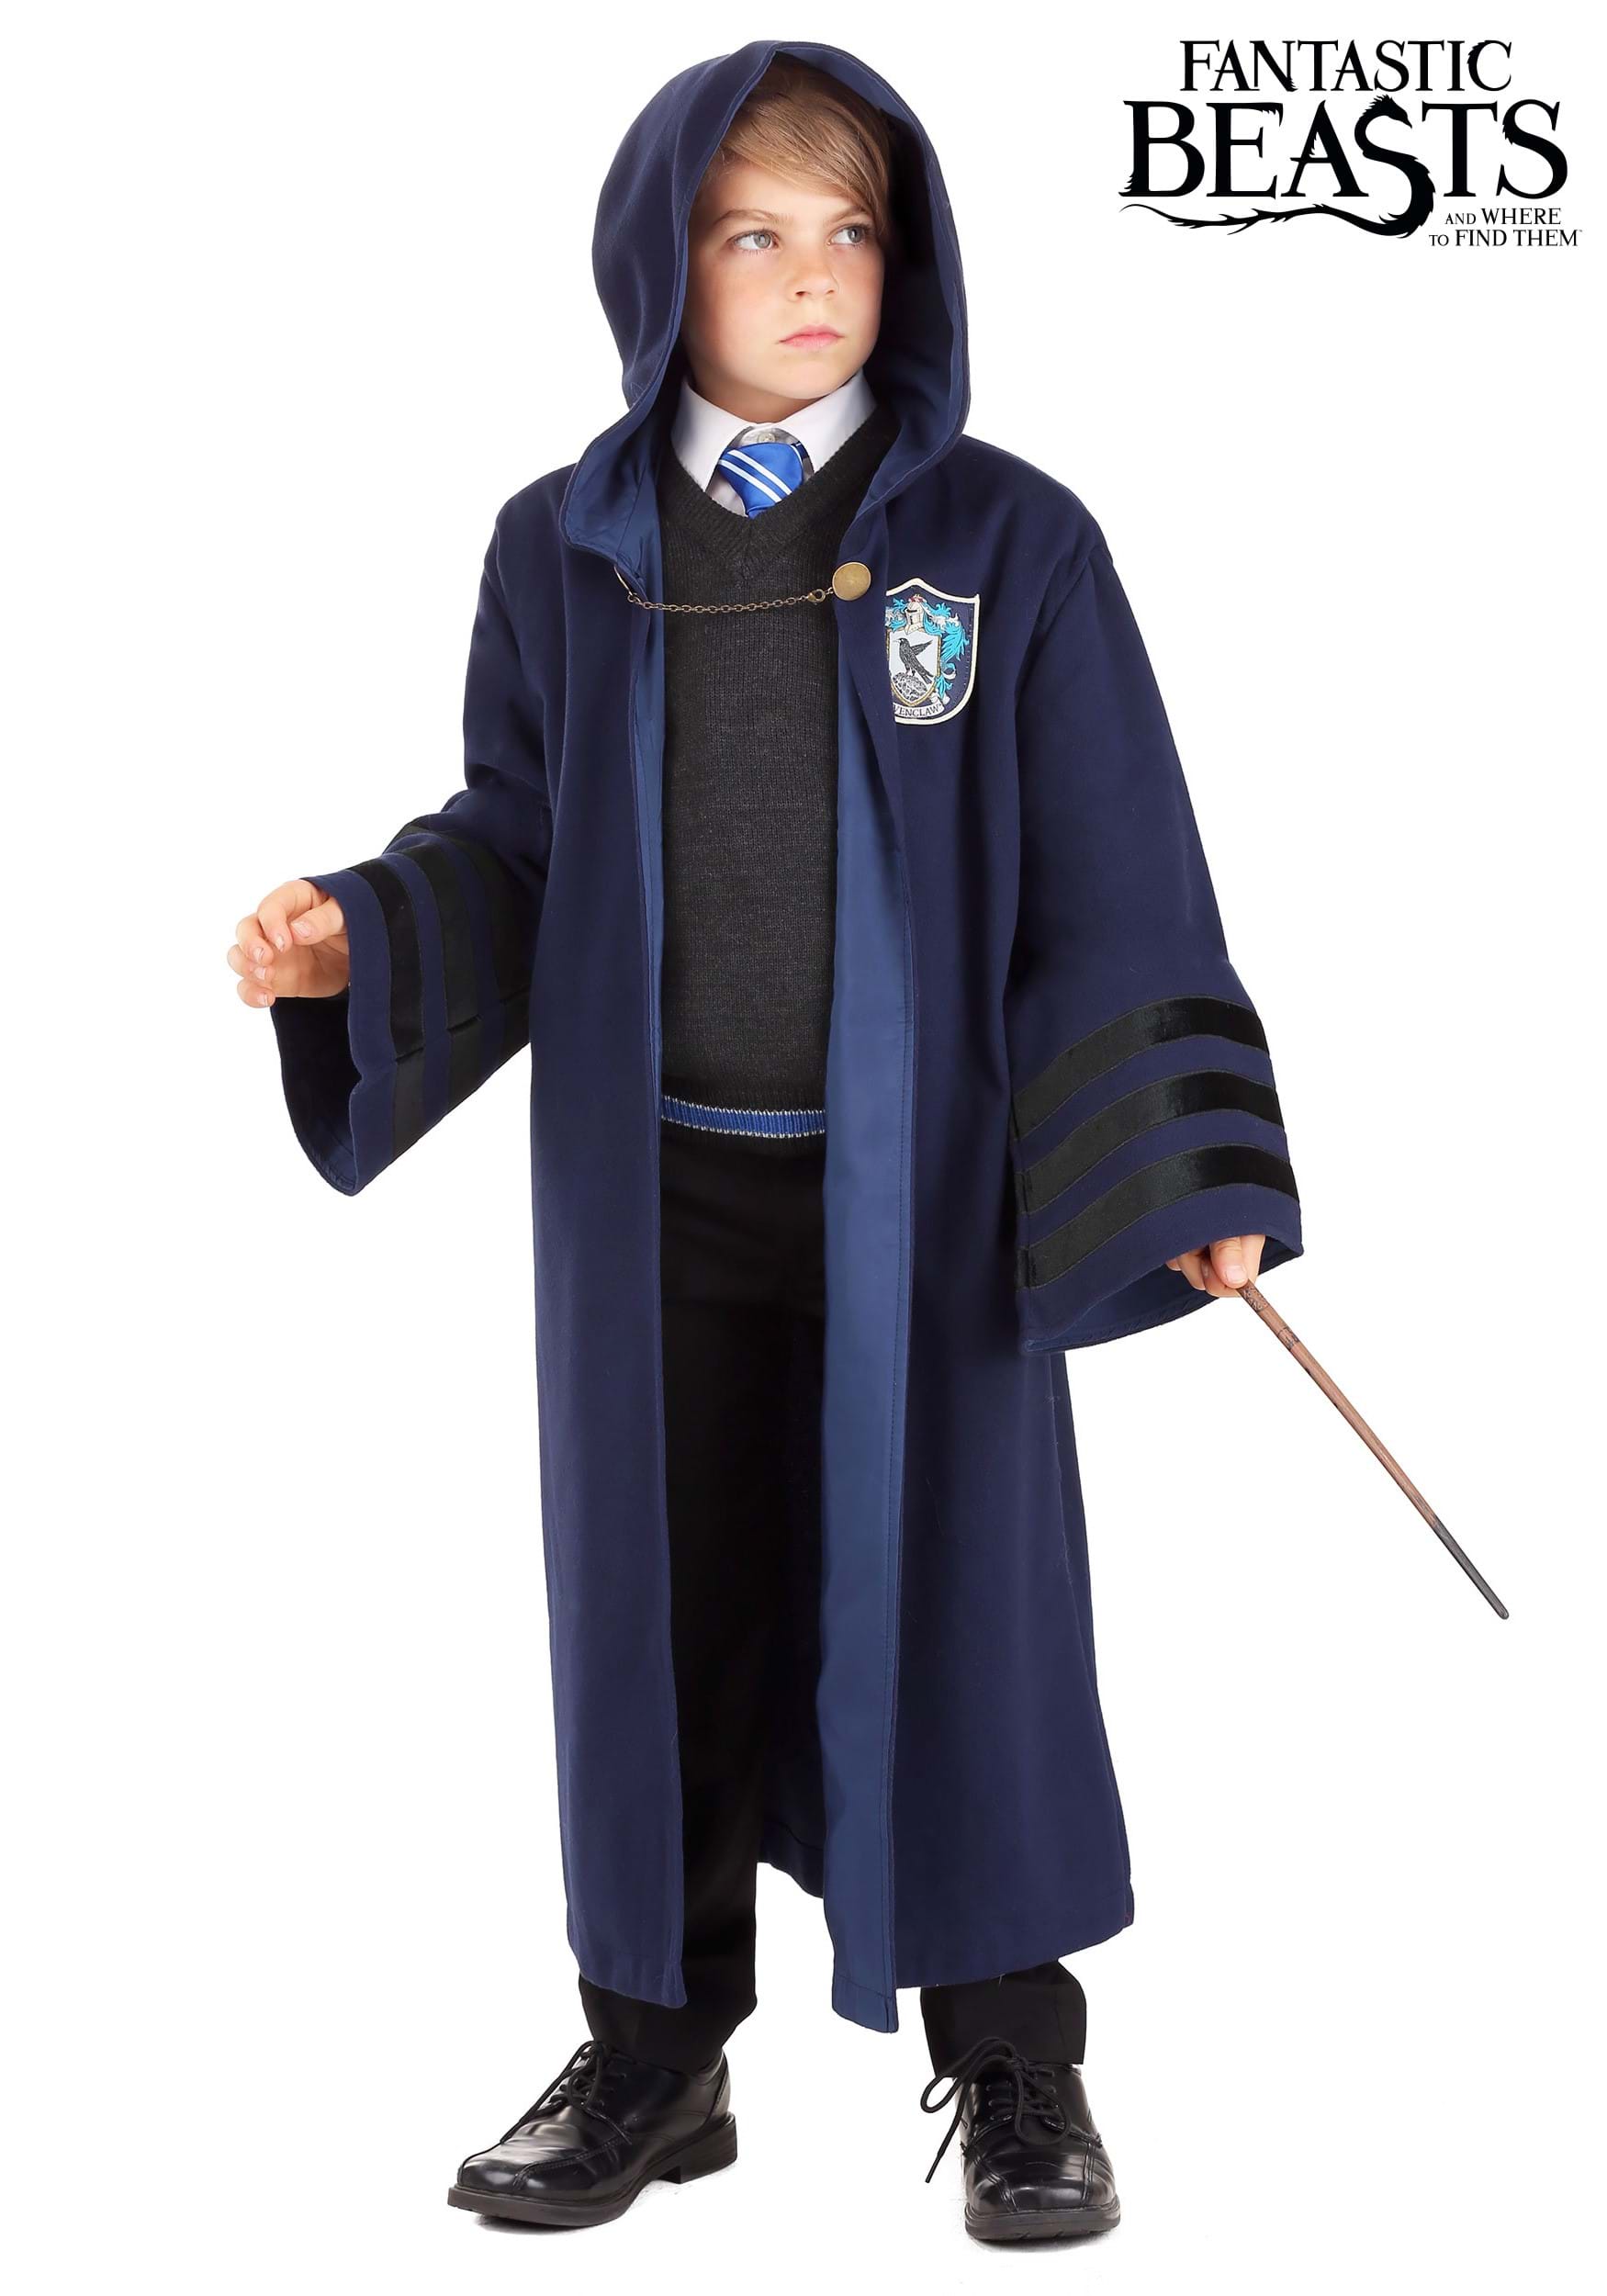 Boys Girls Harry Potter Kids Robe Tie Costume Cosplay Ravenclaw